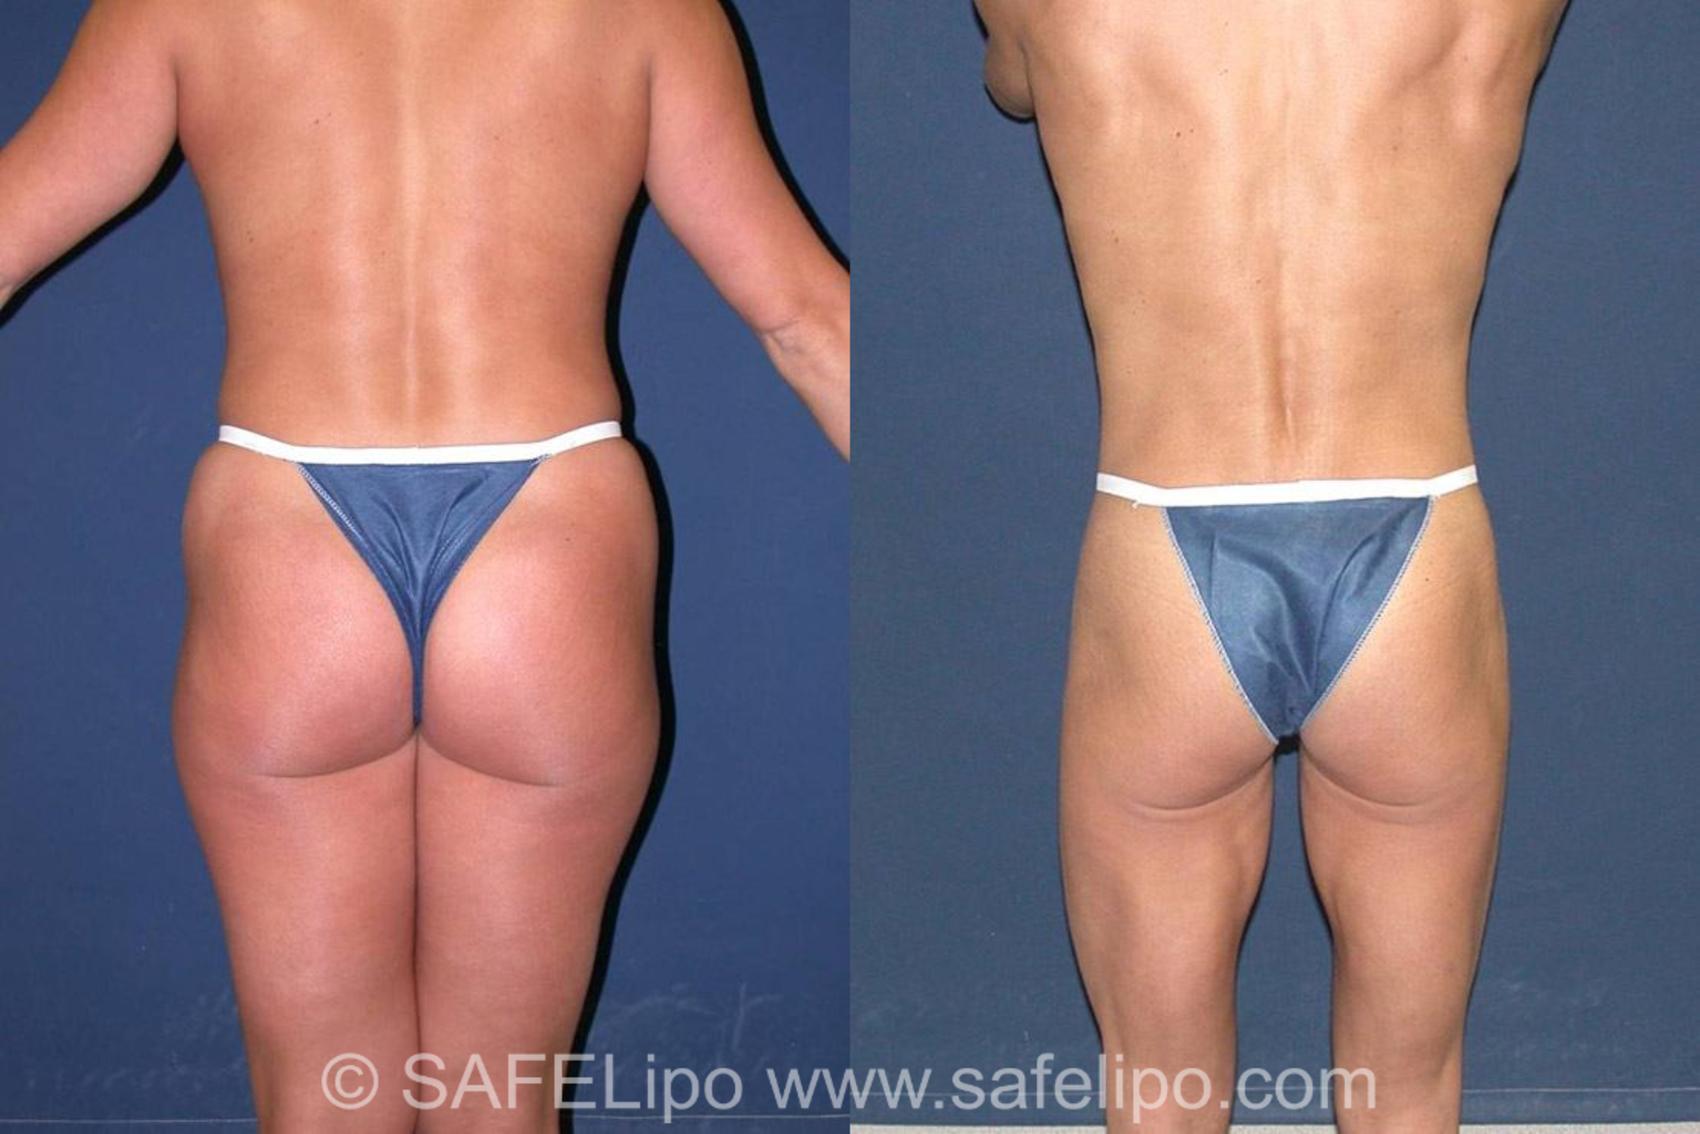 SAFELipoHD® Case 7 Before & After View #4 | SAFELipo®